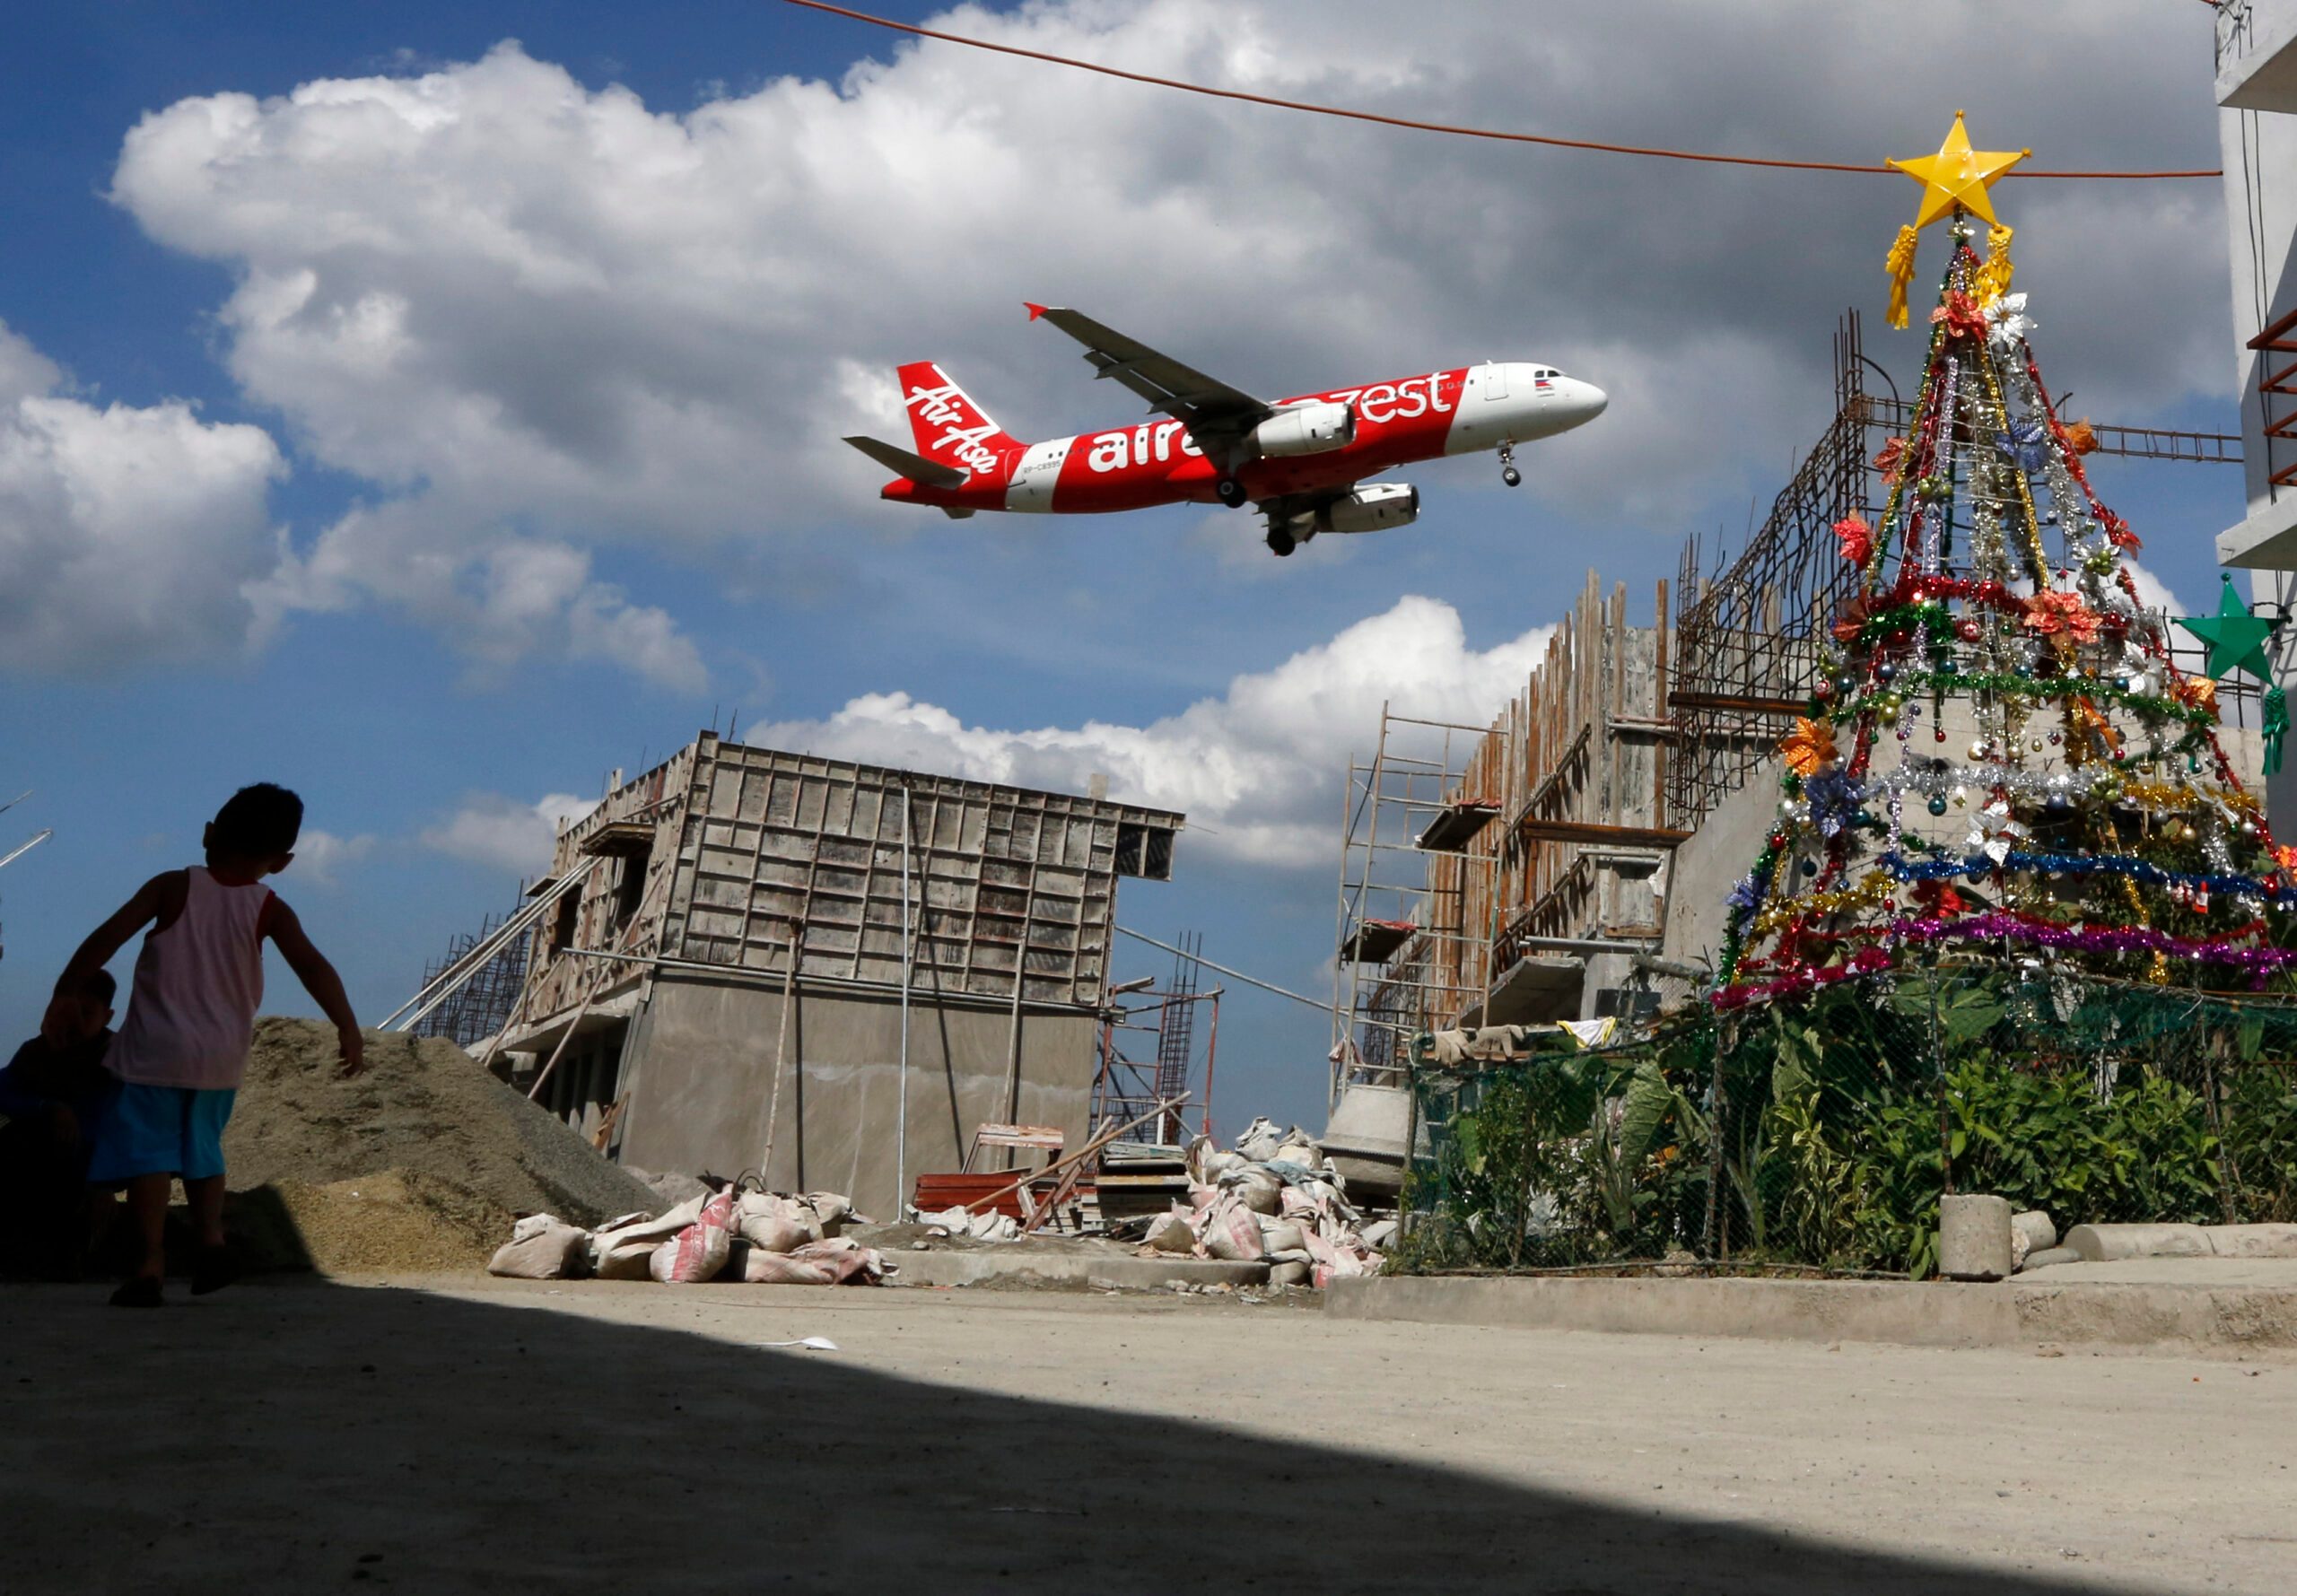 AirAsia Zest sets aside Europe plans, focuses on profitability